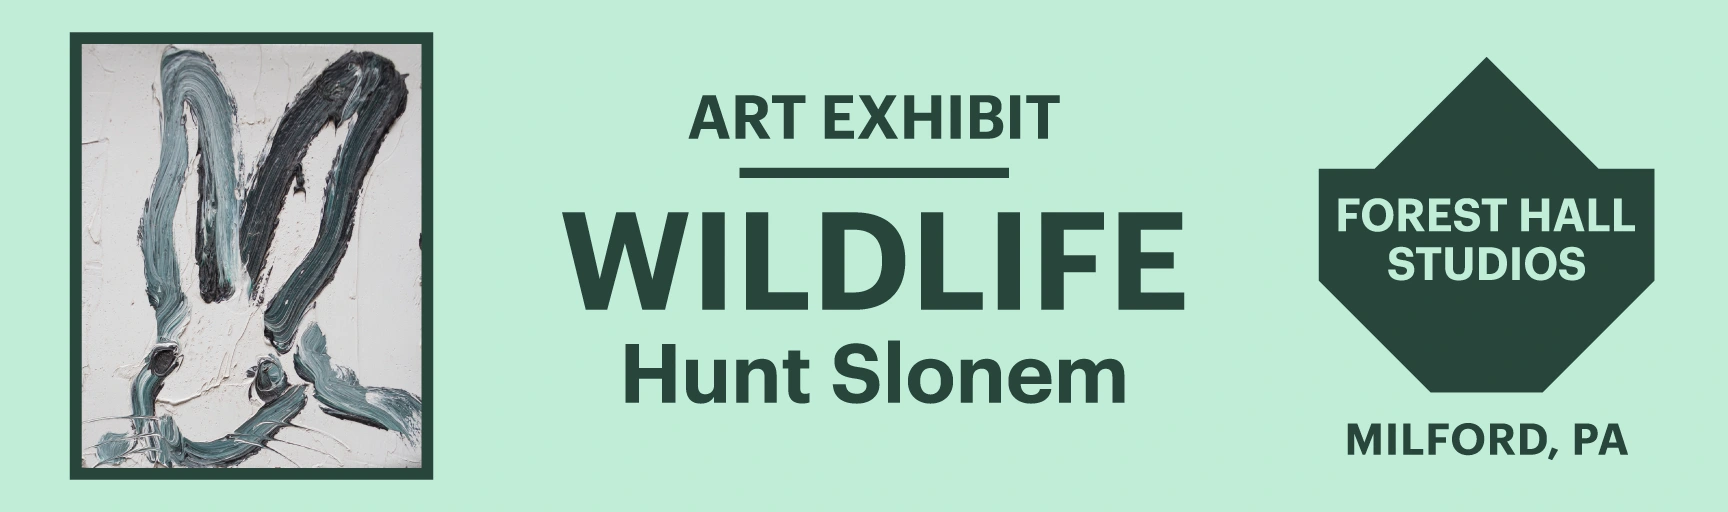 Wildlife Hunt Slonem Banner